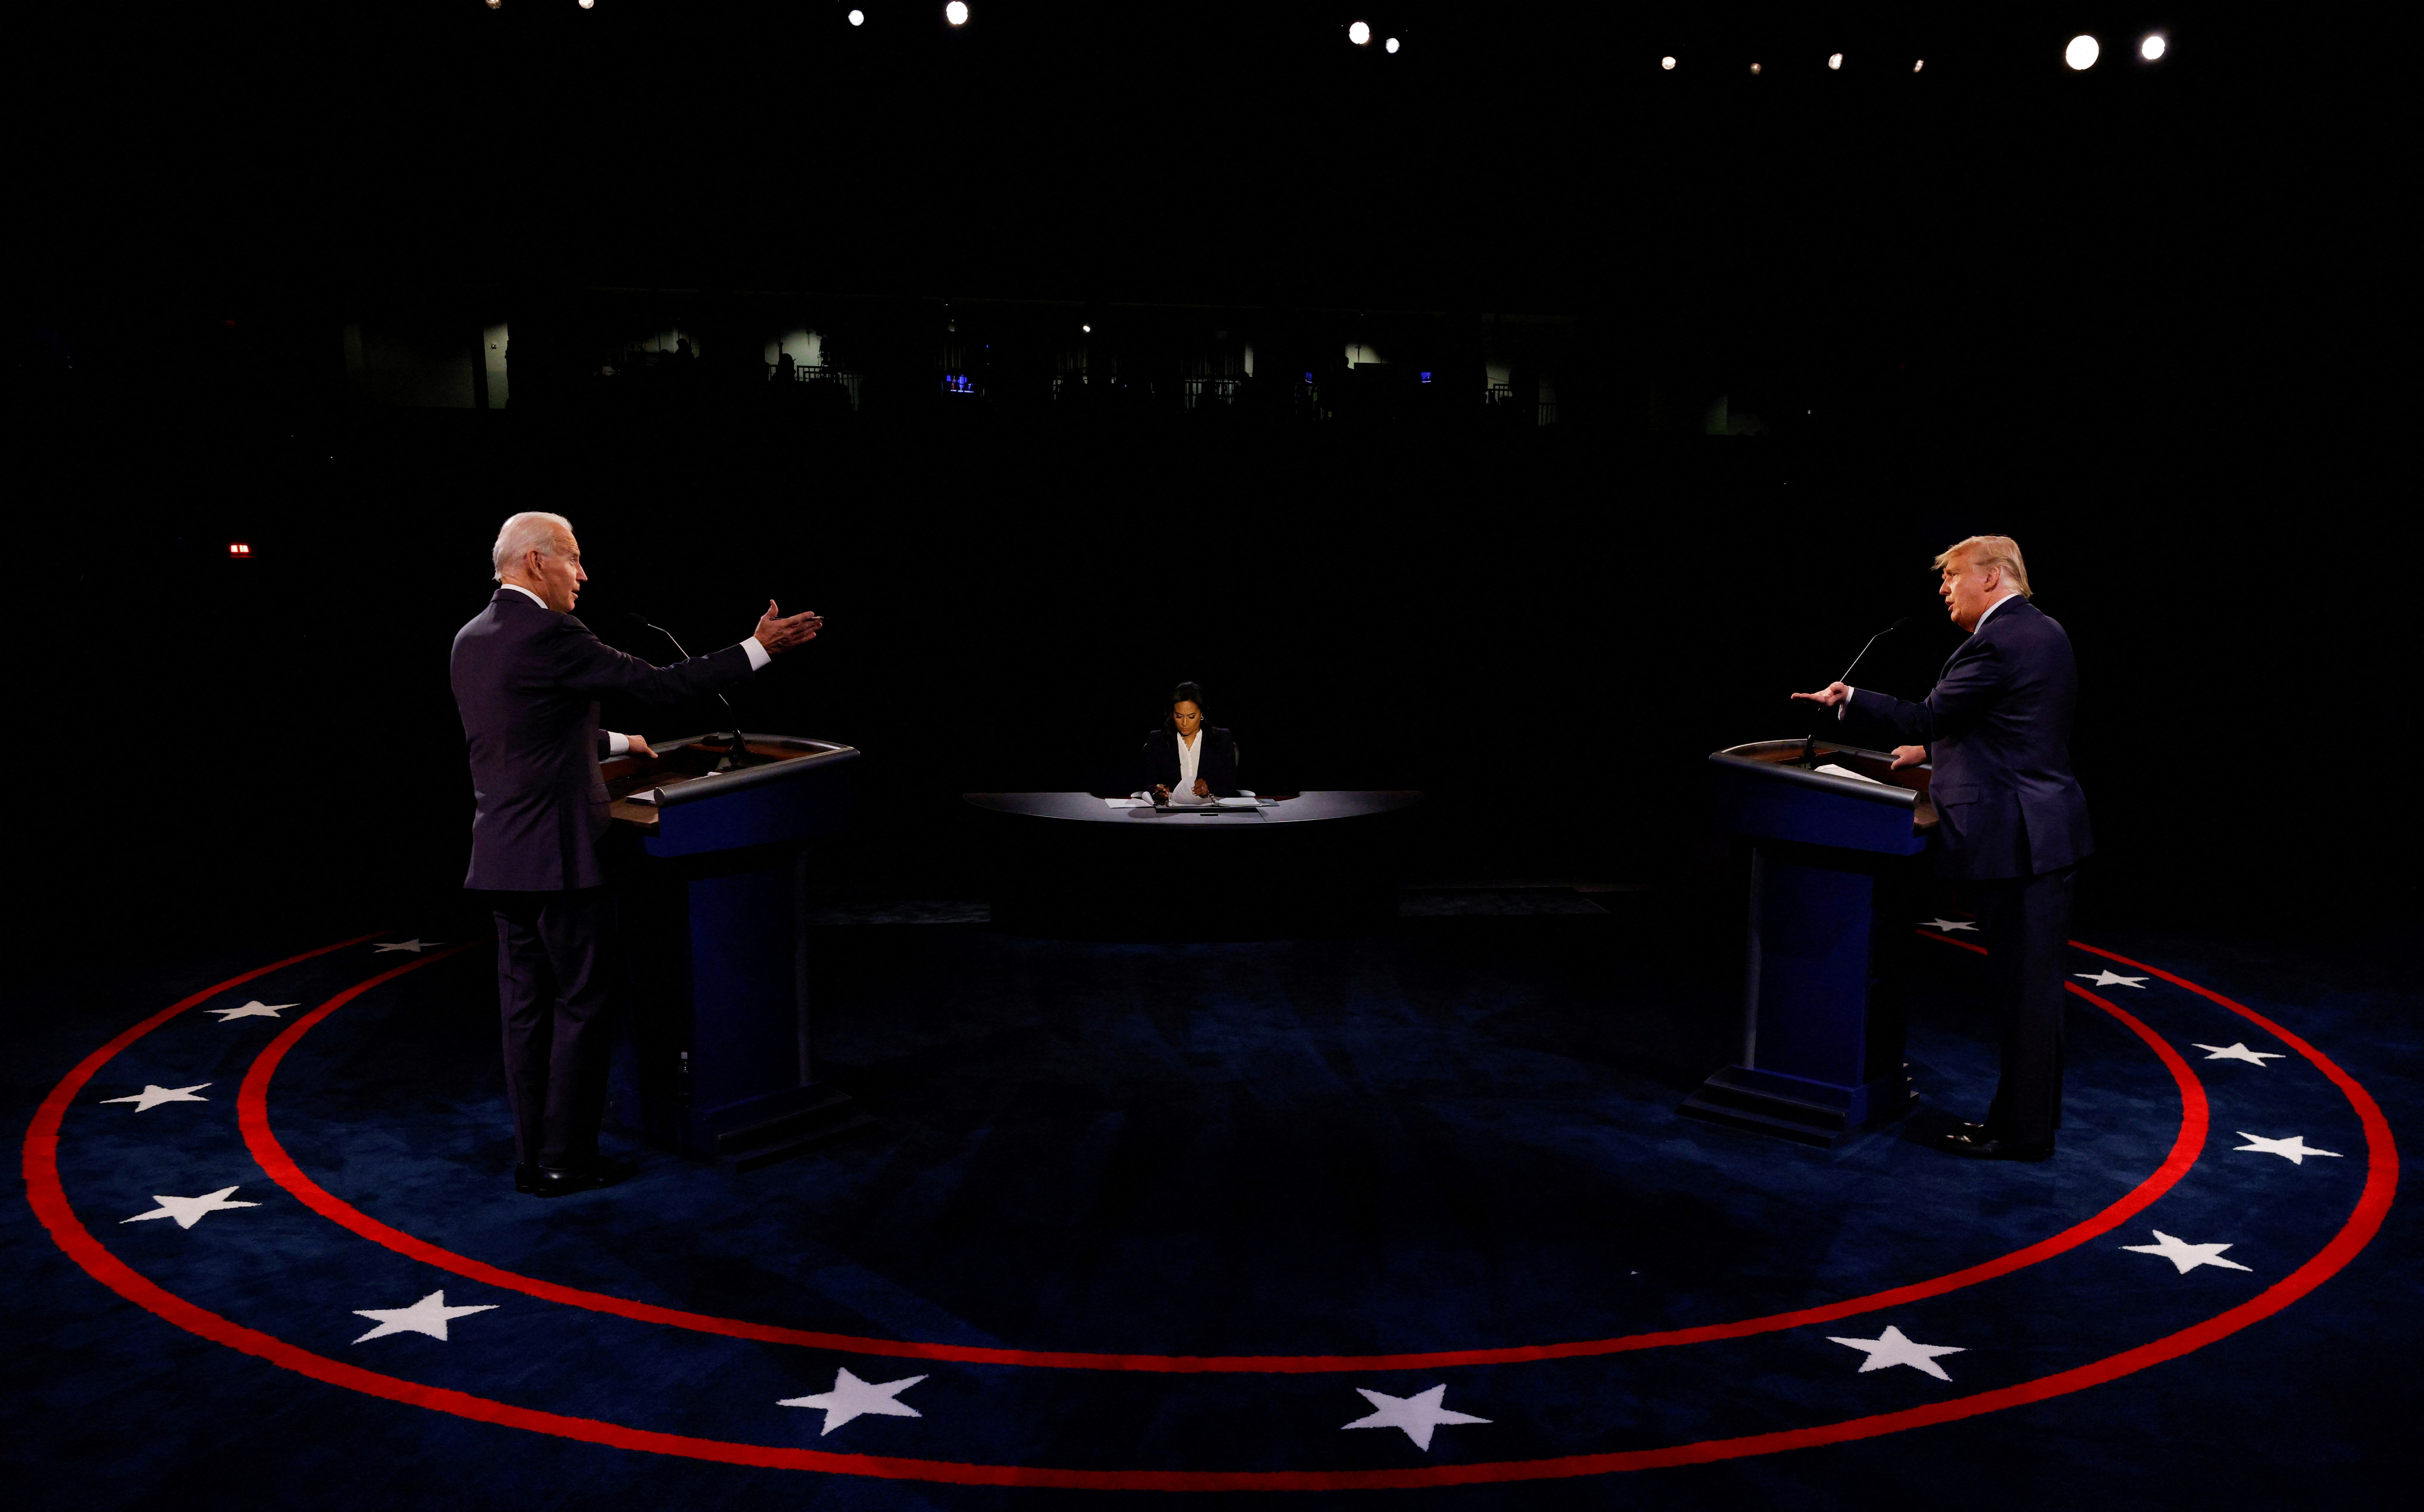 Democratic presidential nominee Biden and President Trump participate in their second debate in Nashville